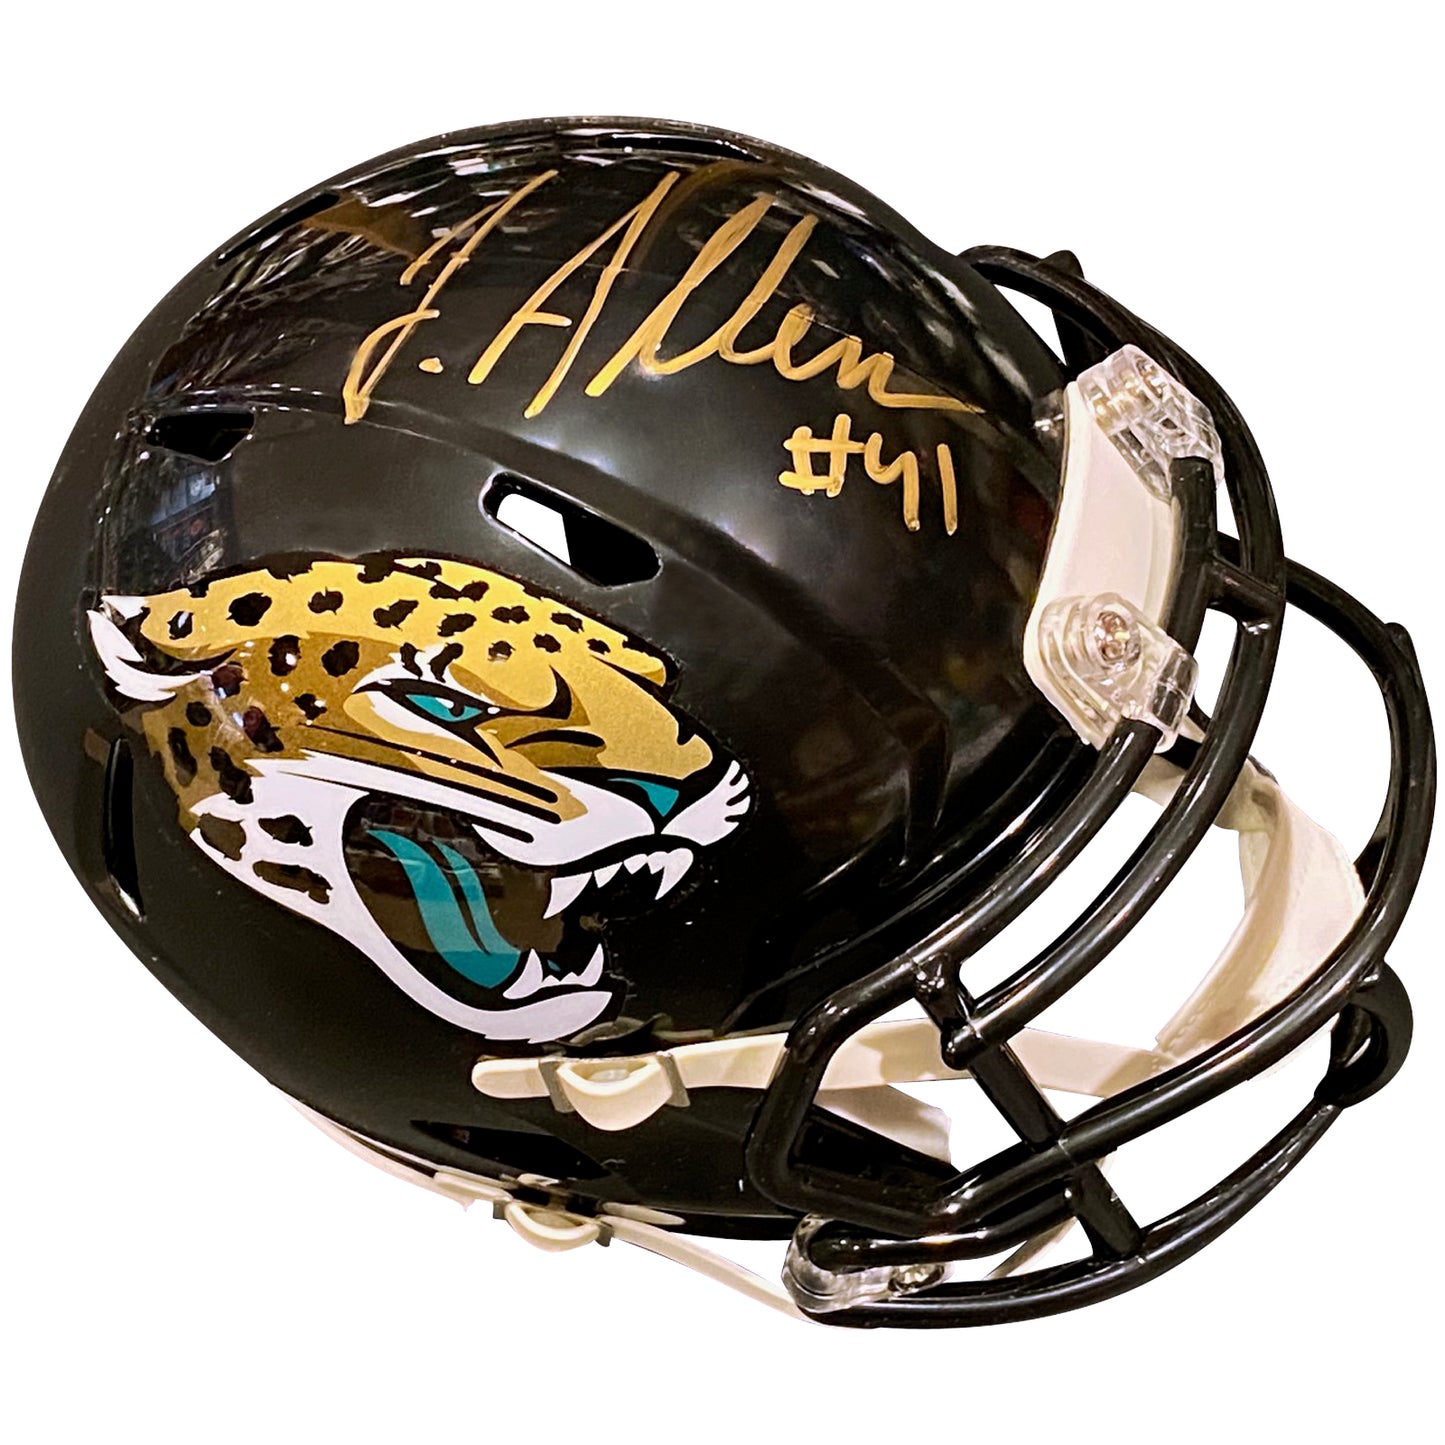 Josh Allen Autographed Jacksonville Jaguars Mini Helmet